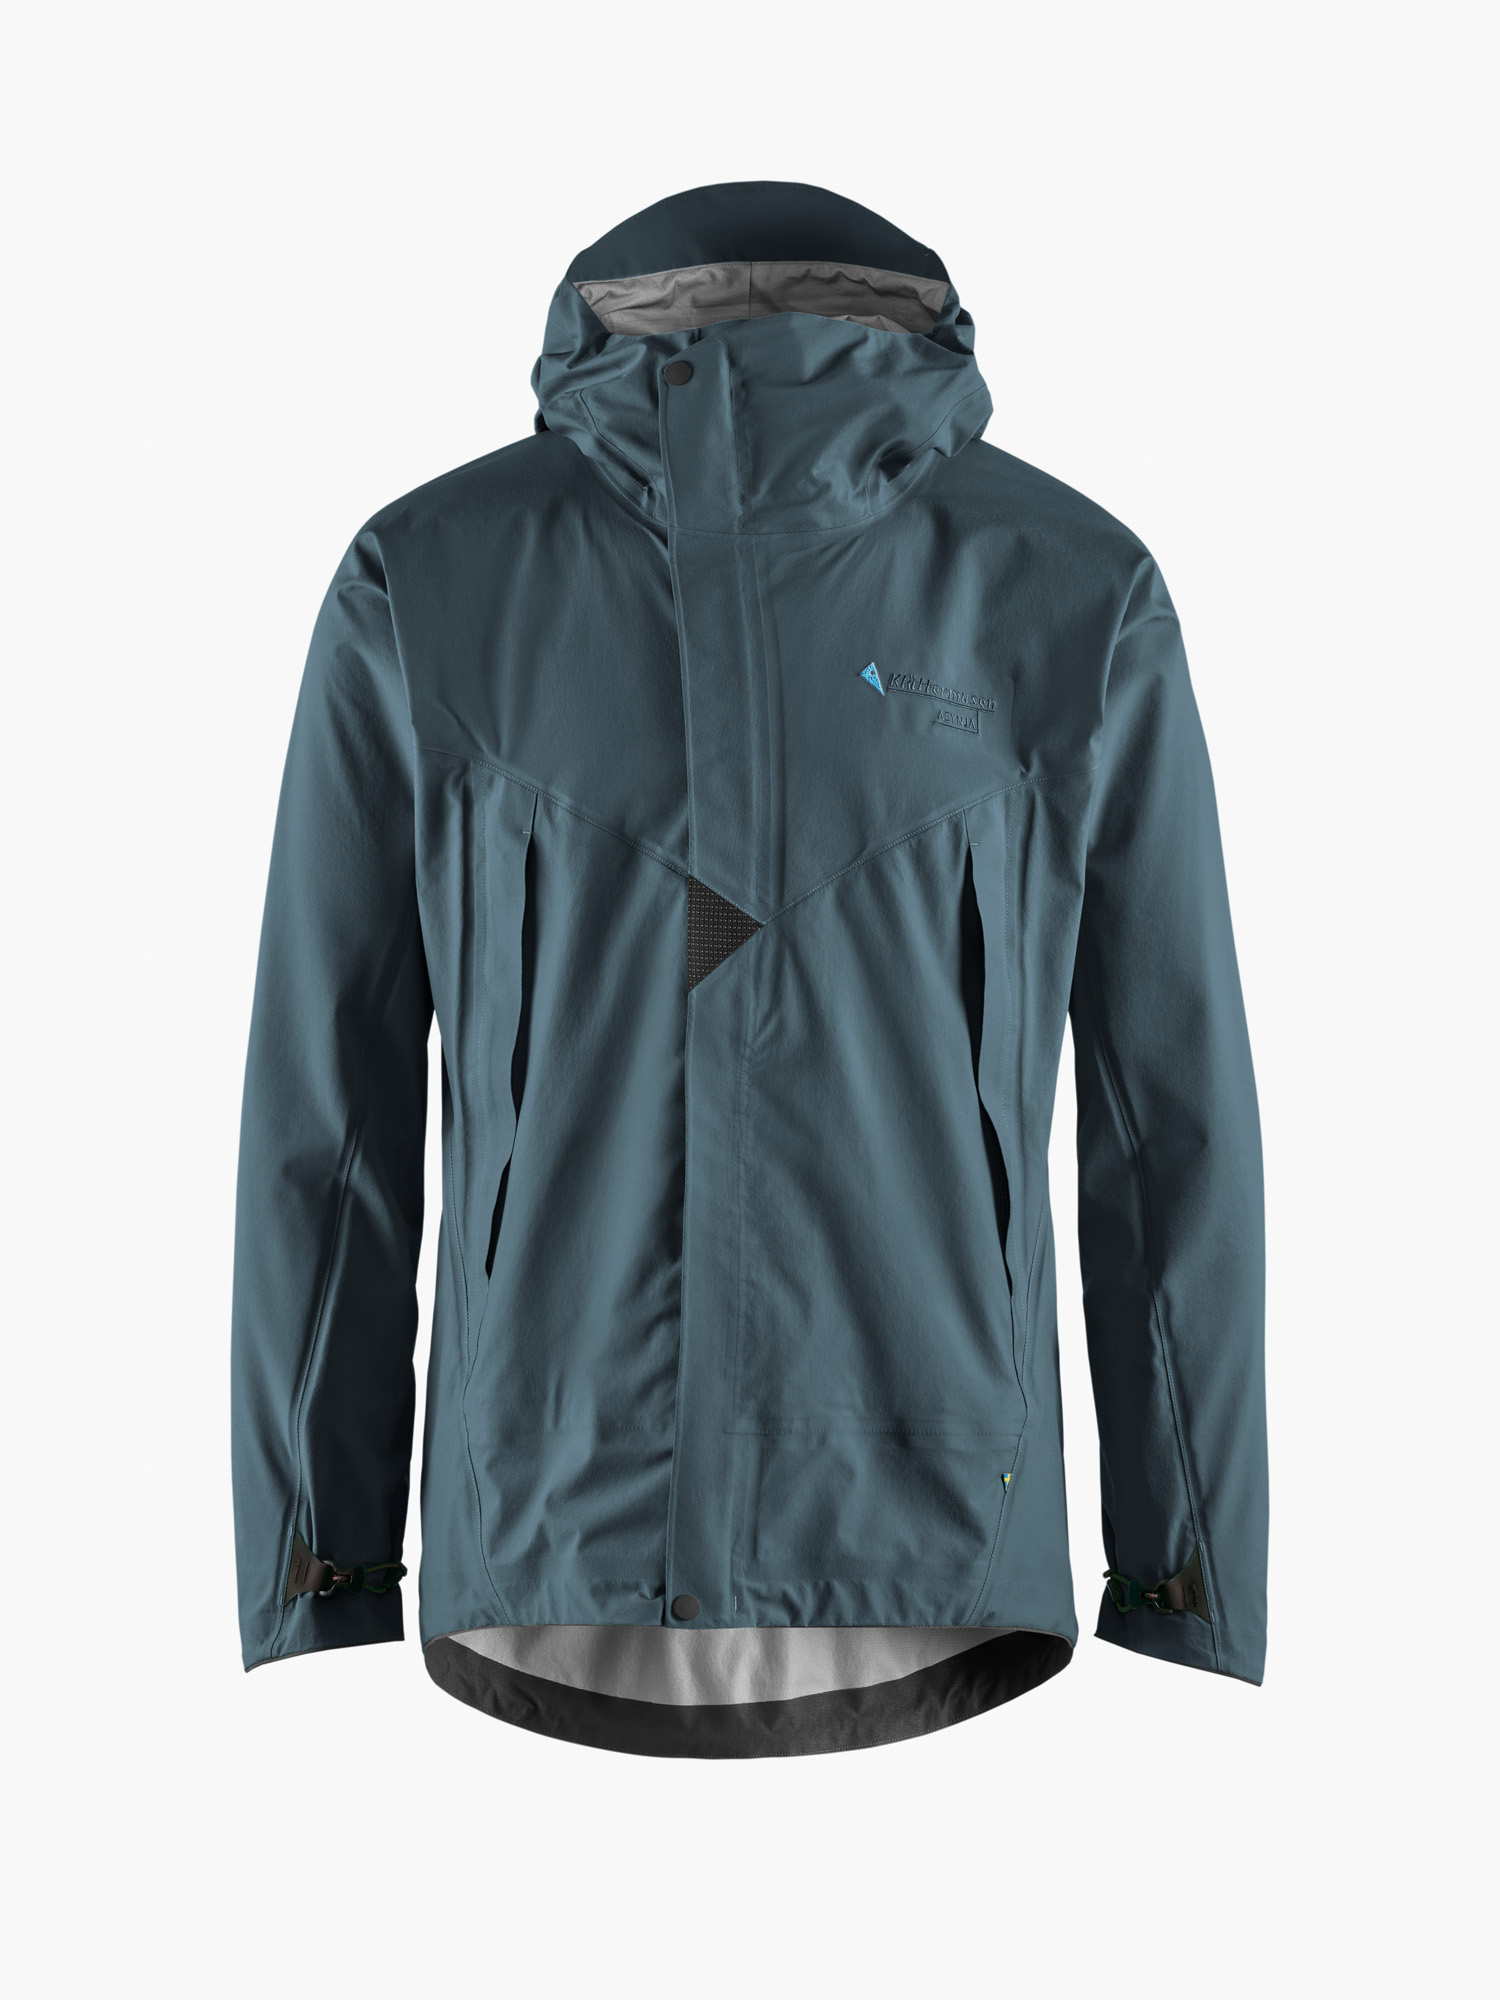 YSENTO Mens Lightweight Waterproof Jacket Windproof Outdoor Camping Hiking Mountain Jacket Coat with Hood 